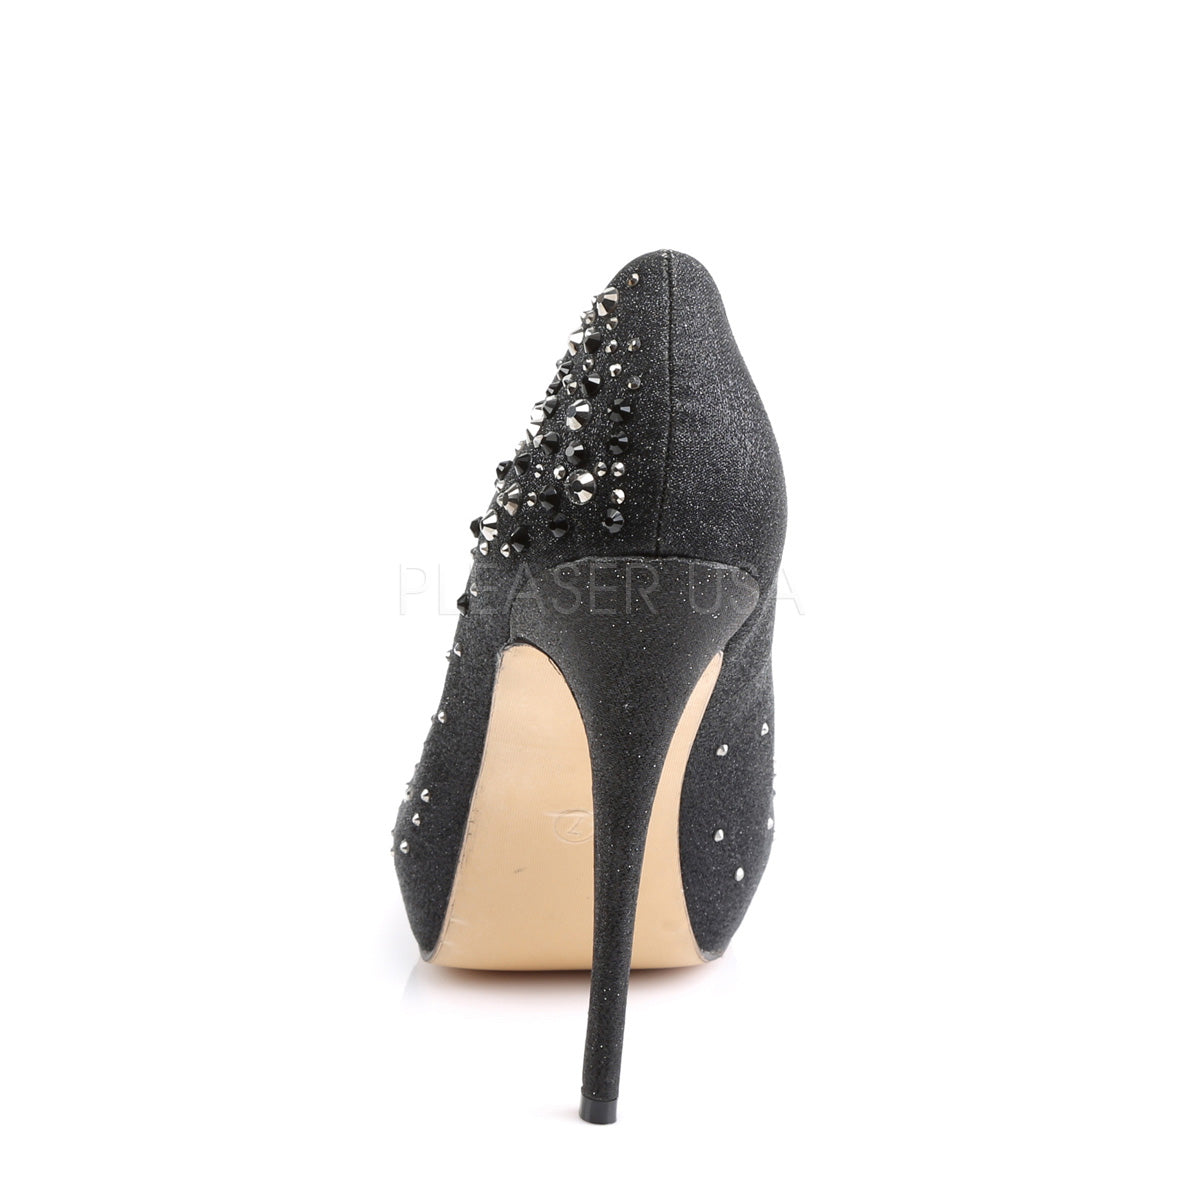 IN STOCK / SALE - Fabulicious Heiress-22R Black Rhinestone Dress Heels AU Size 5 - A Shoe Addiction